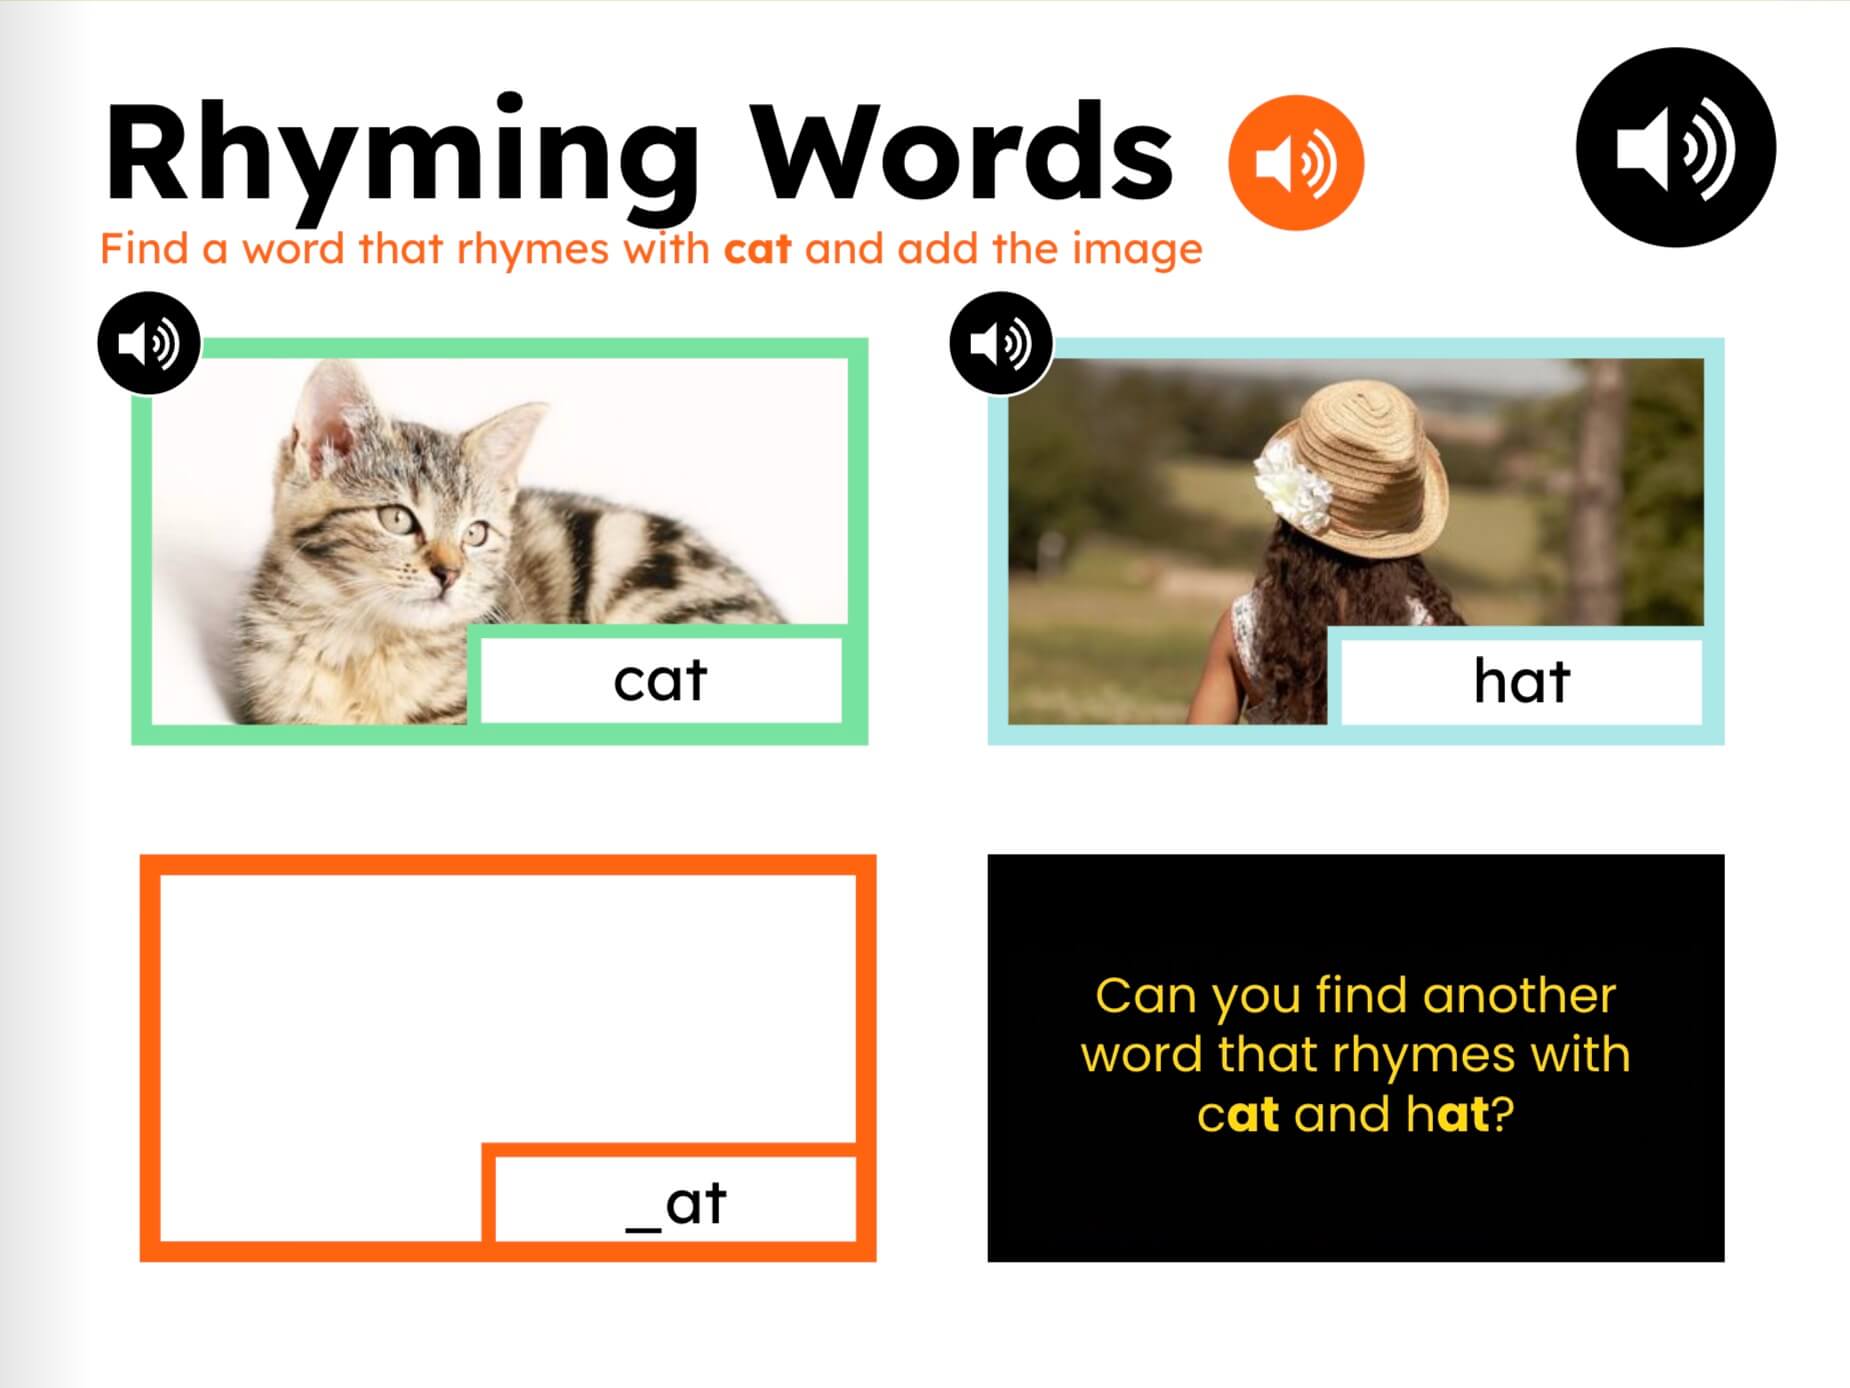 Rhyming Words exercise